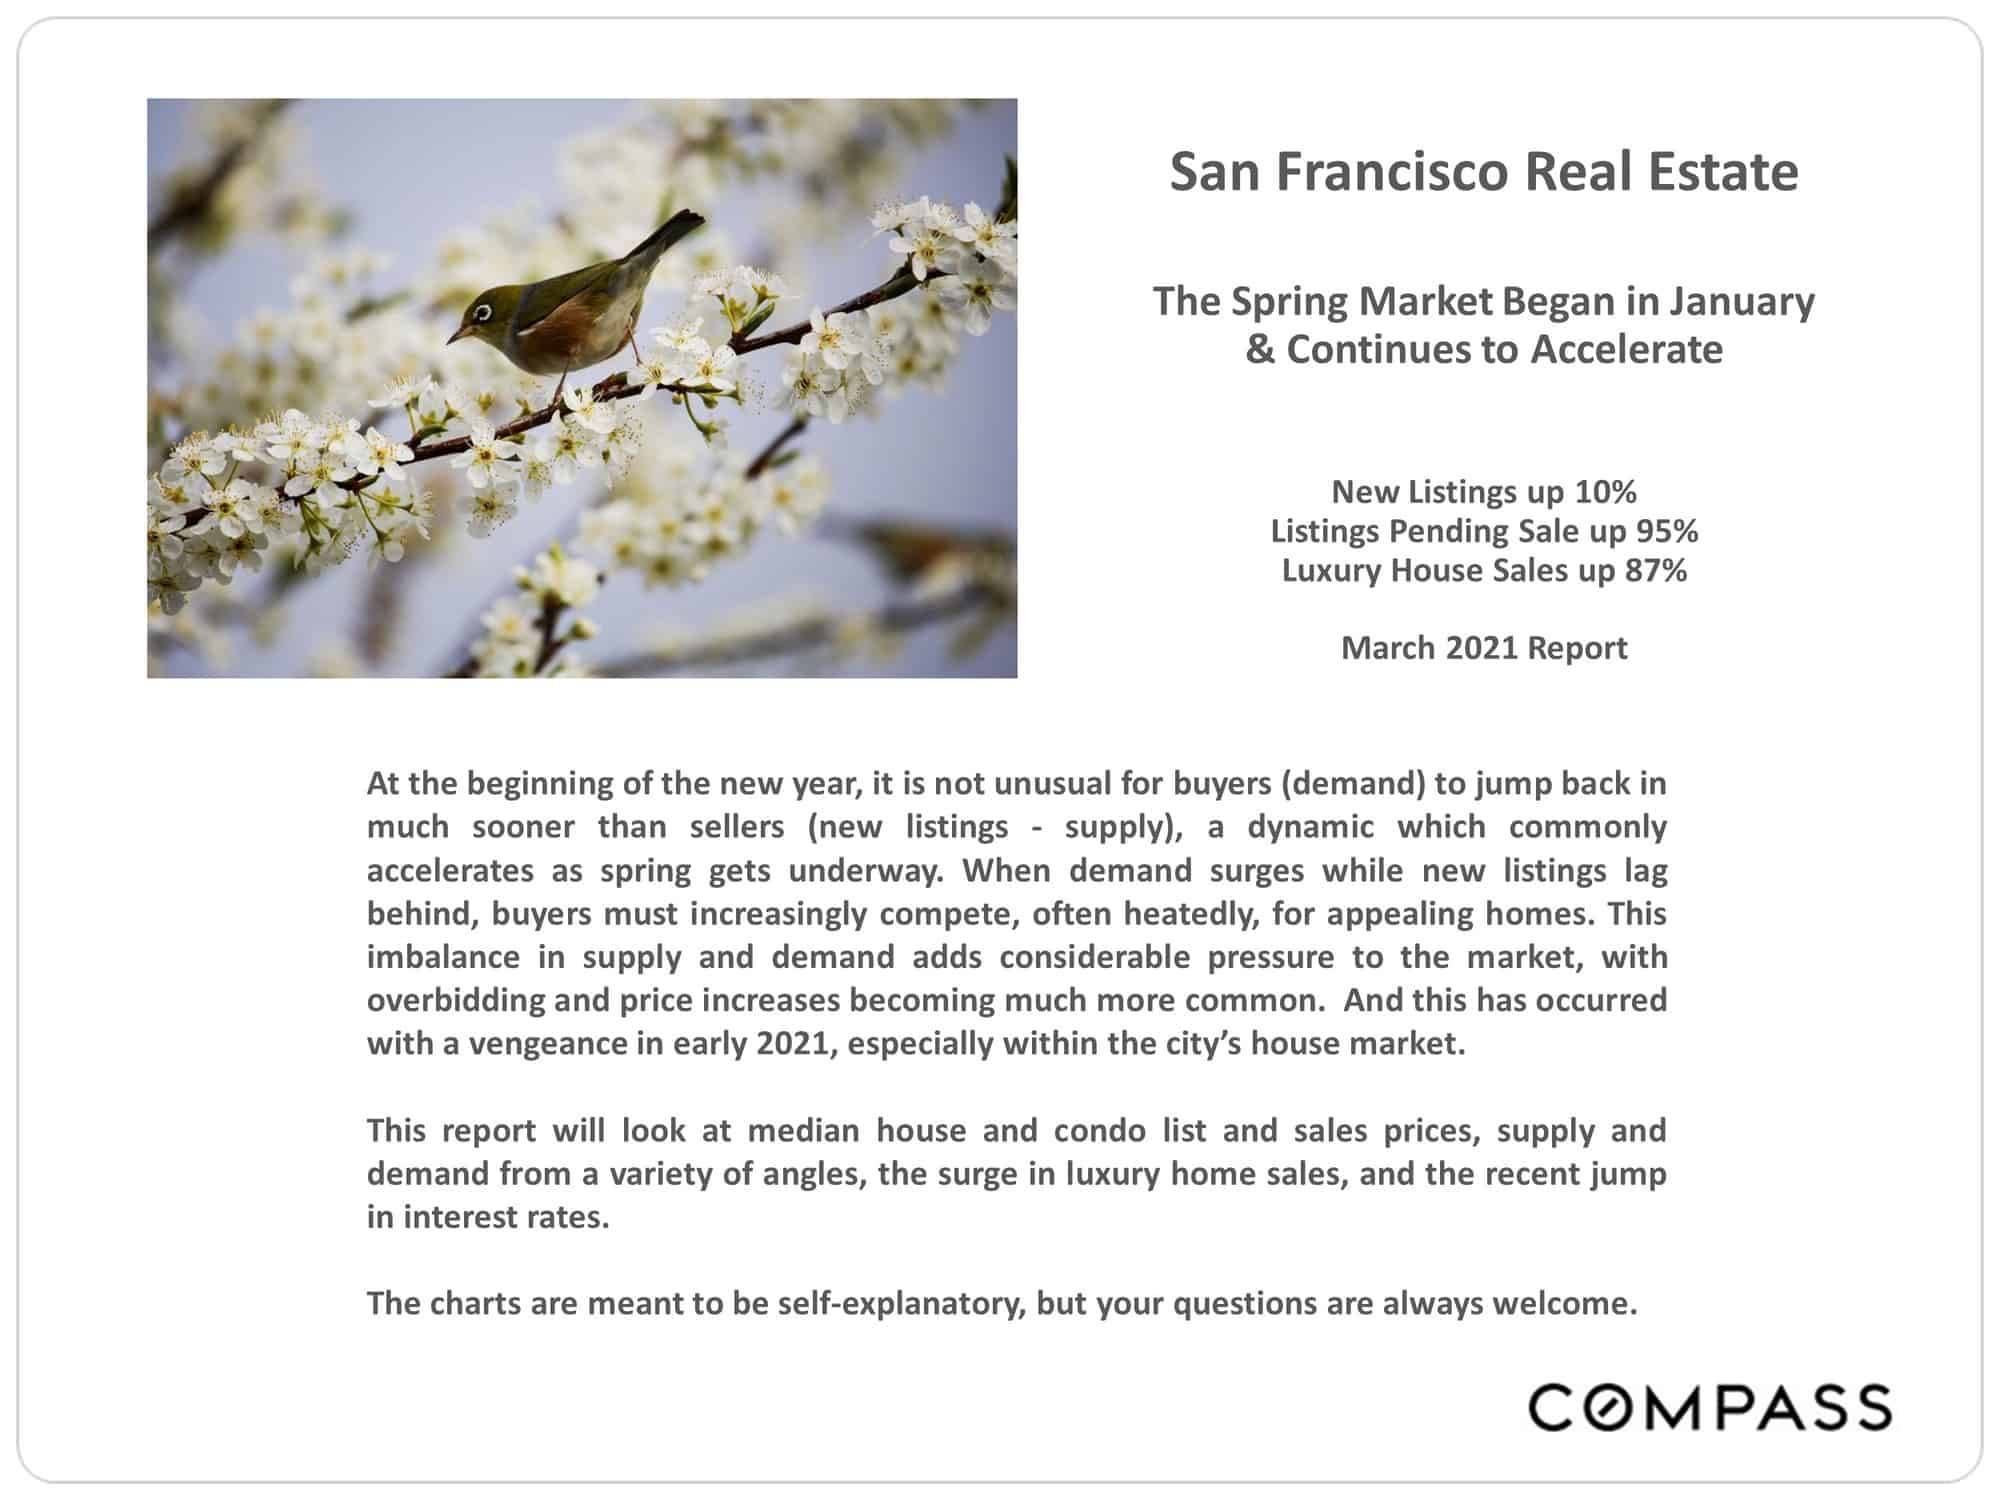 San Francisco March 2021 Real Estate Market Report